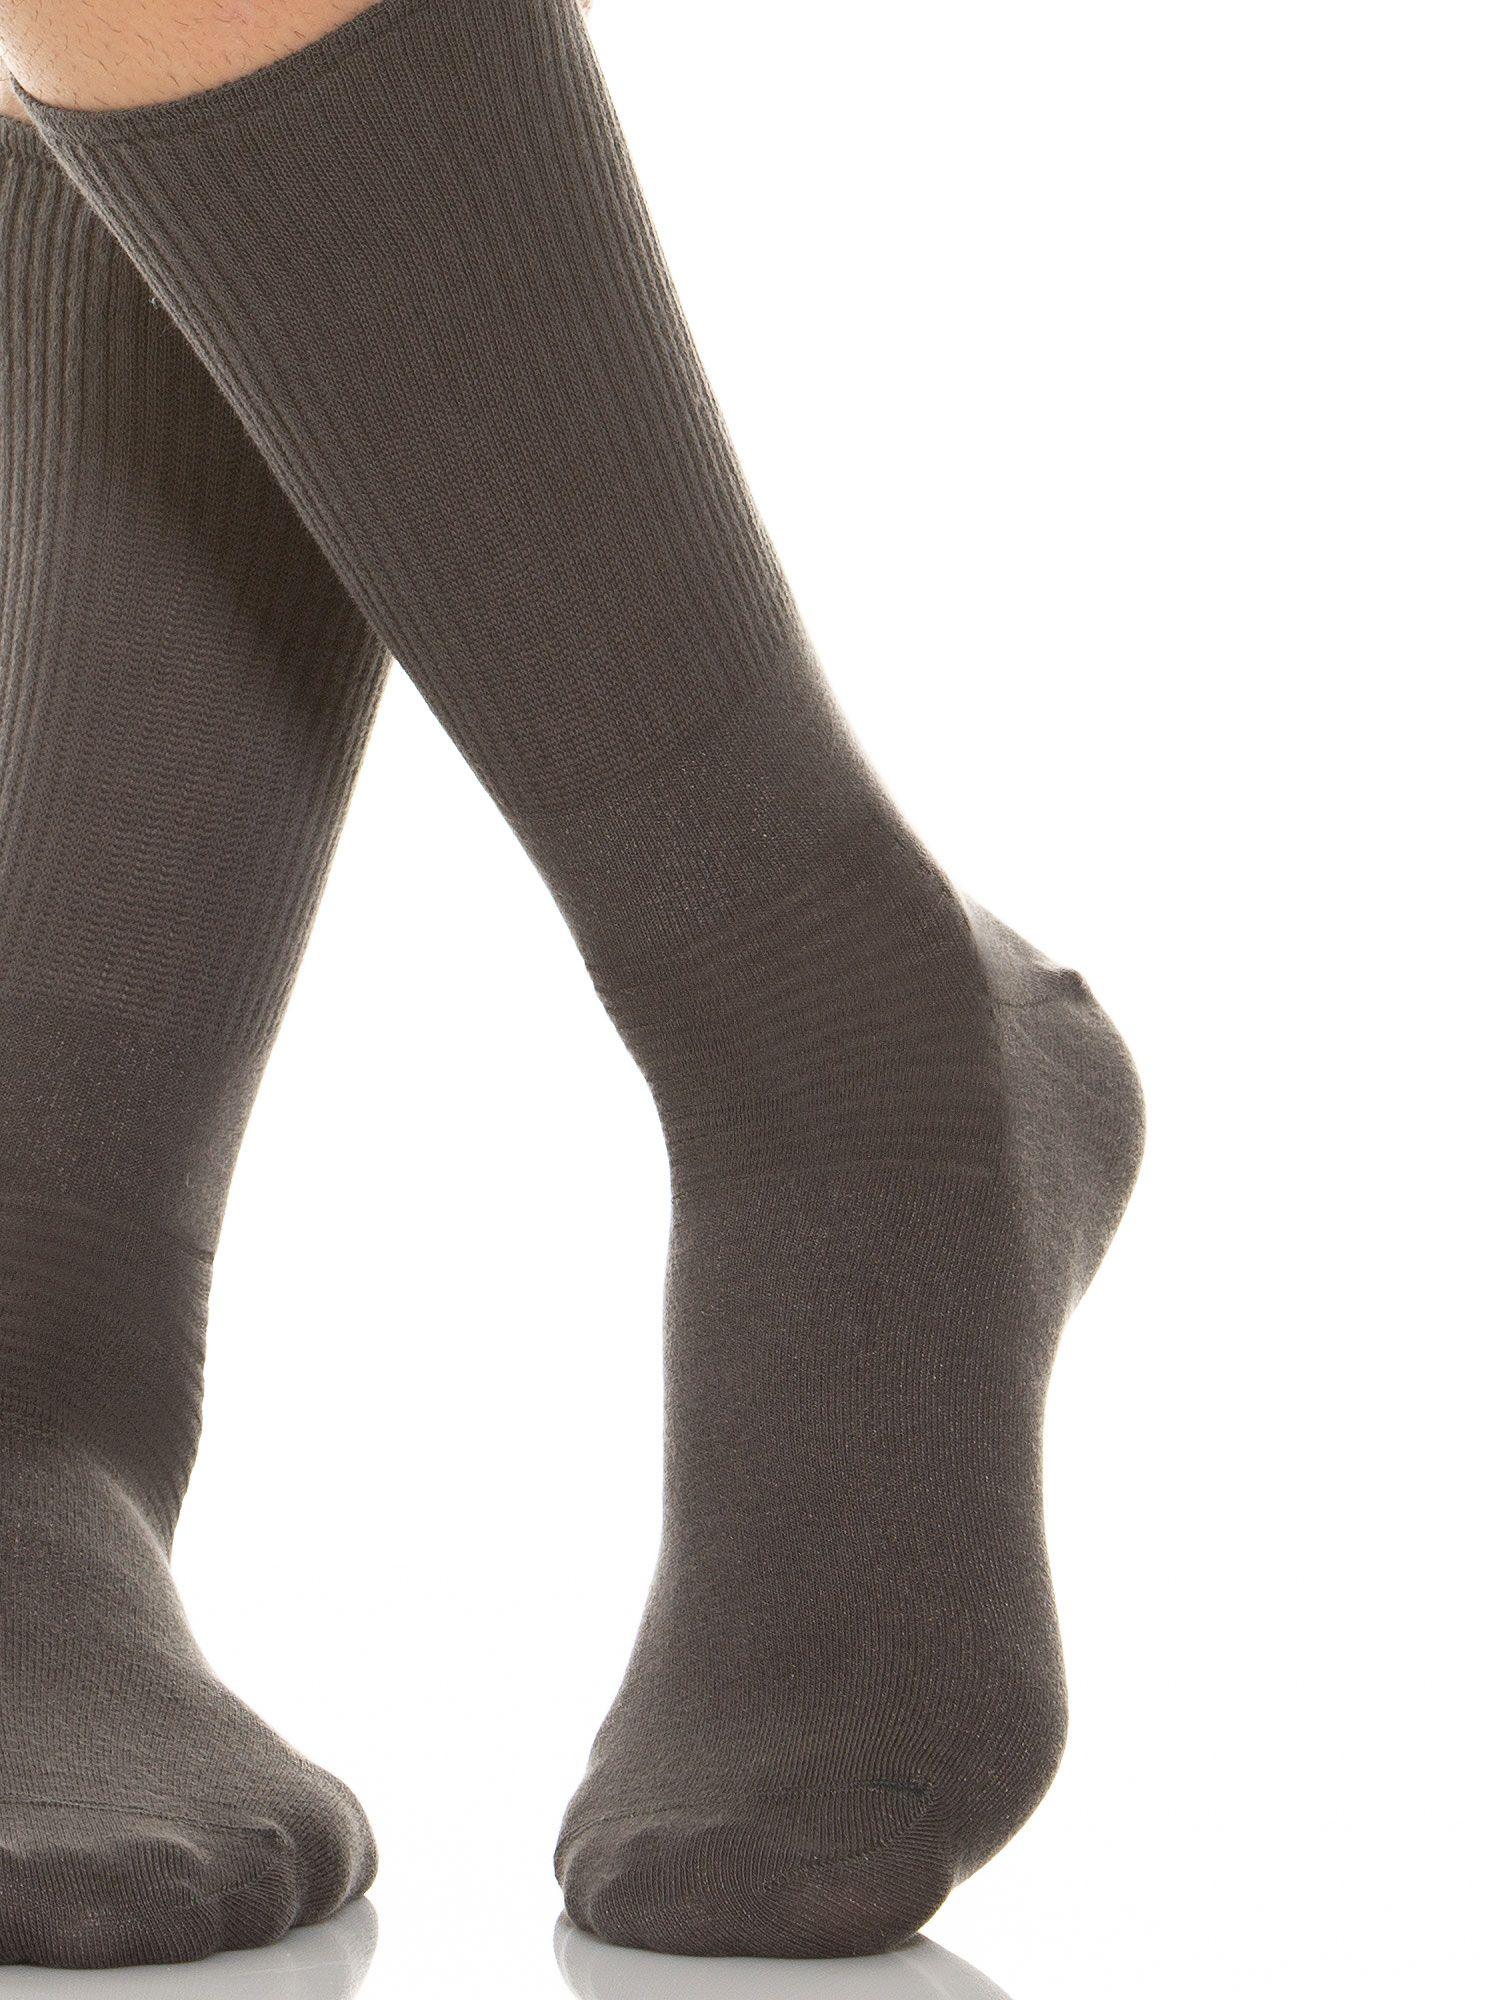 – Buy Silver with socks fibre Diabetic Wellness X-Static Shoppee